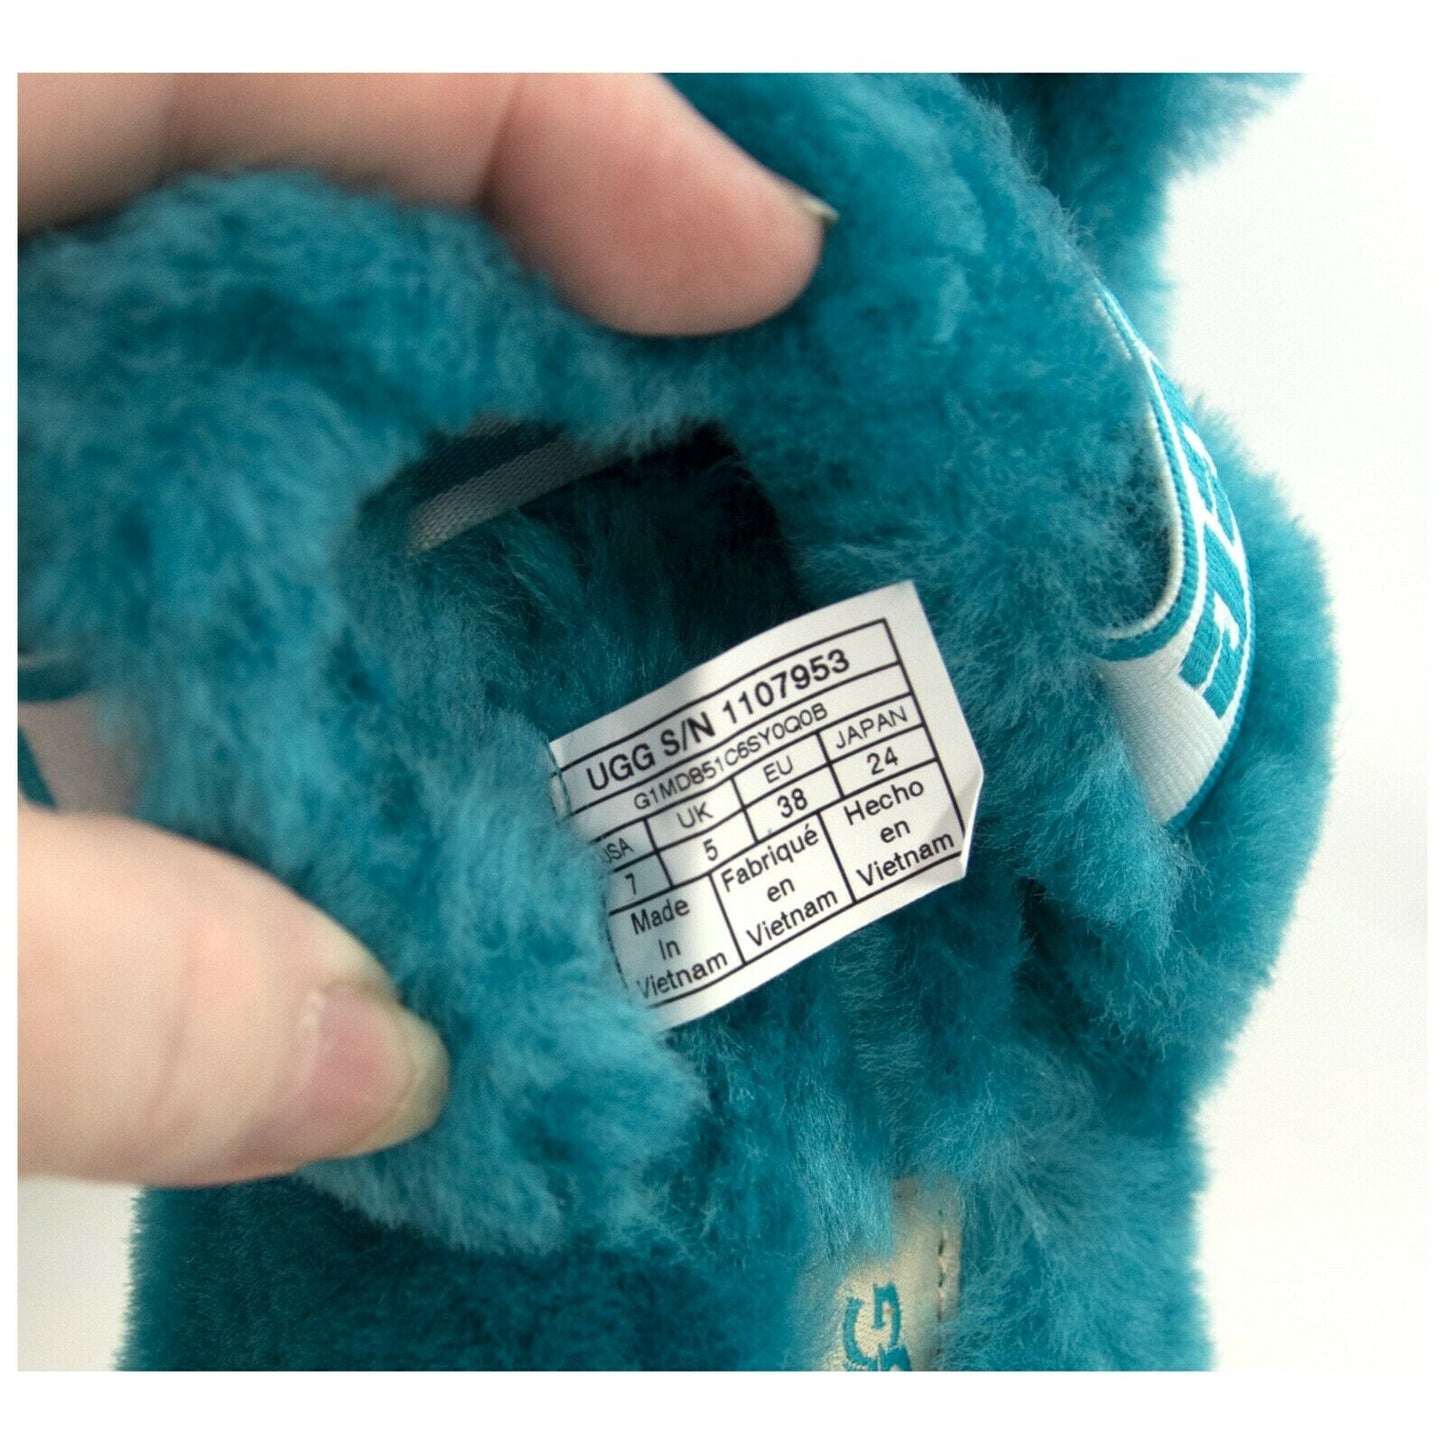 UGG Fluff Oh Yea Aqua Blue Sheepskin Fur Slippers Slides Sandals Sz 7 NIB